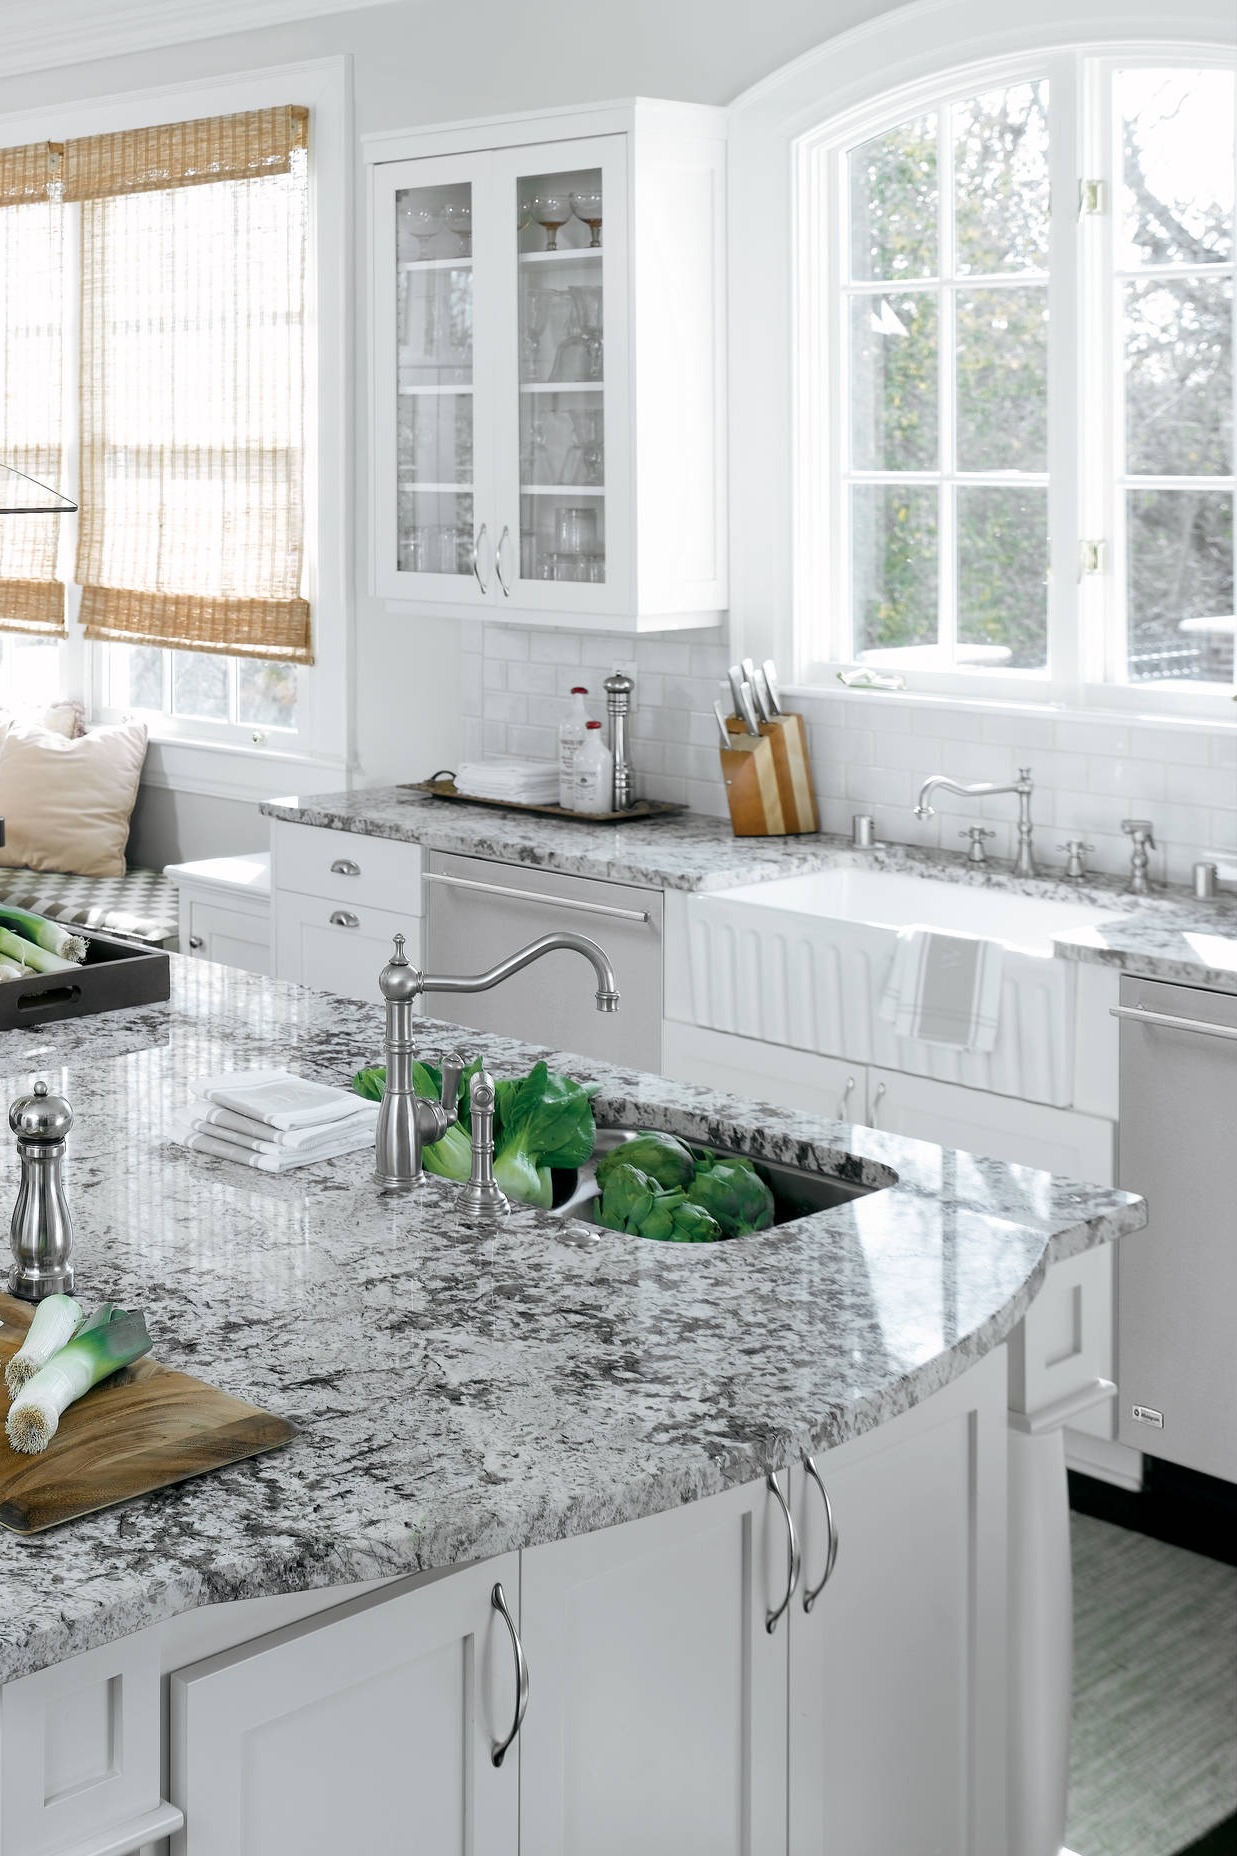 Marble Look White Countertops With Cabinets Subway Tiles Backsplash Dark Hardwood Floors